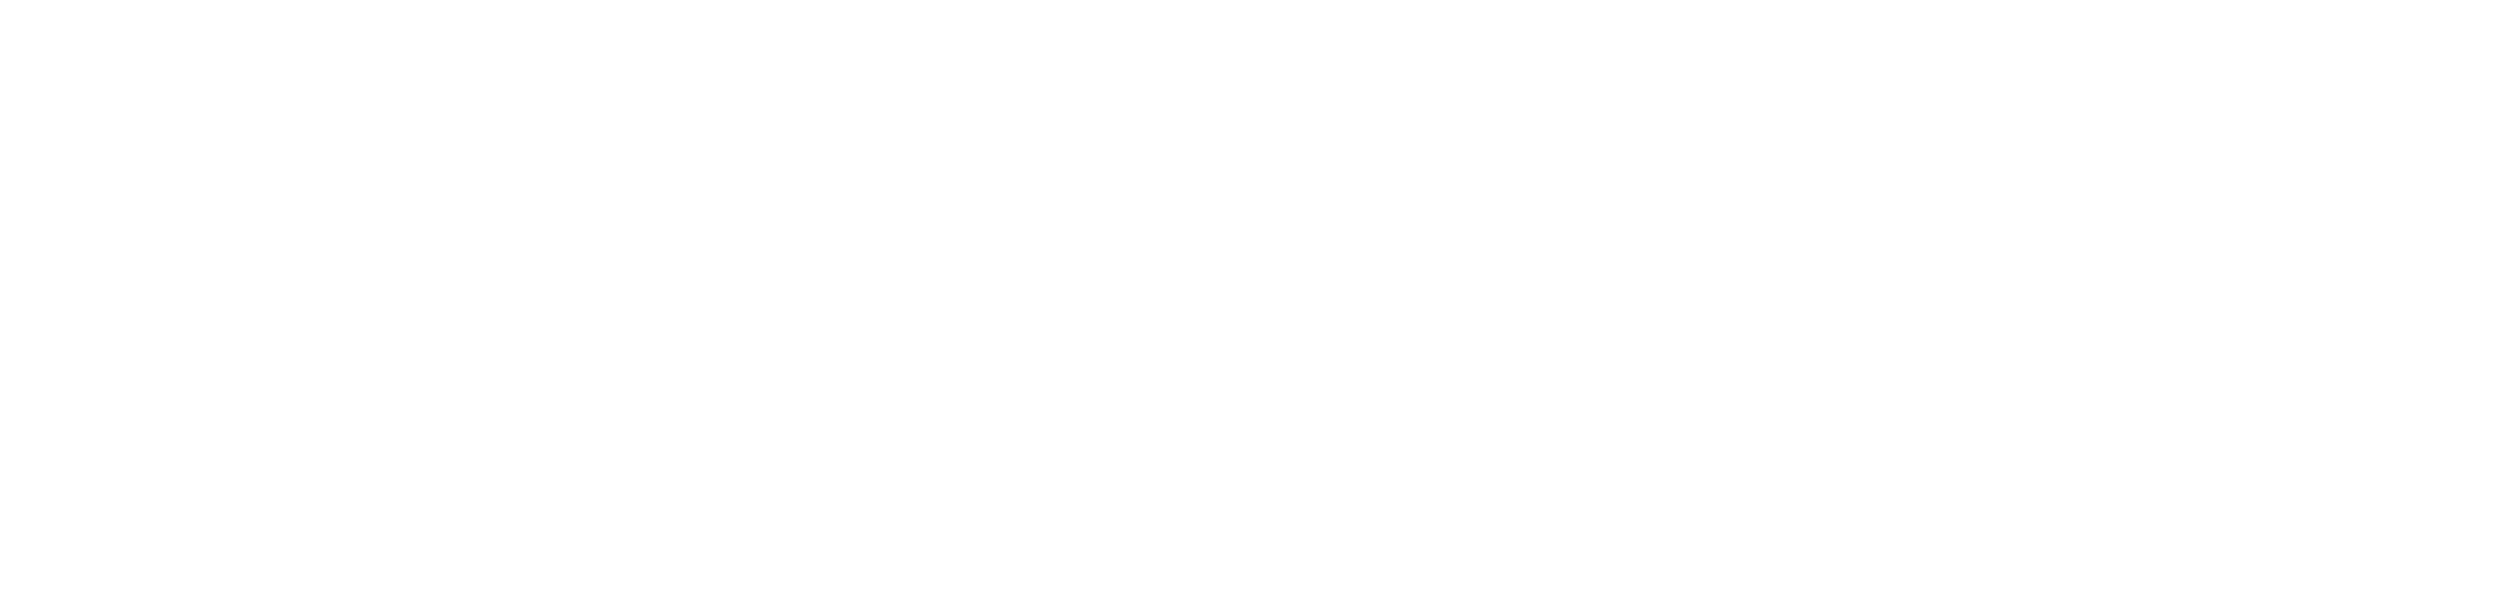 Meskel Ethiopian Restaurant